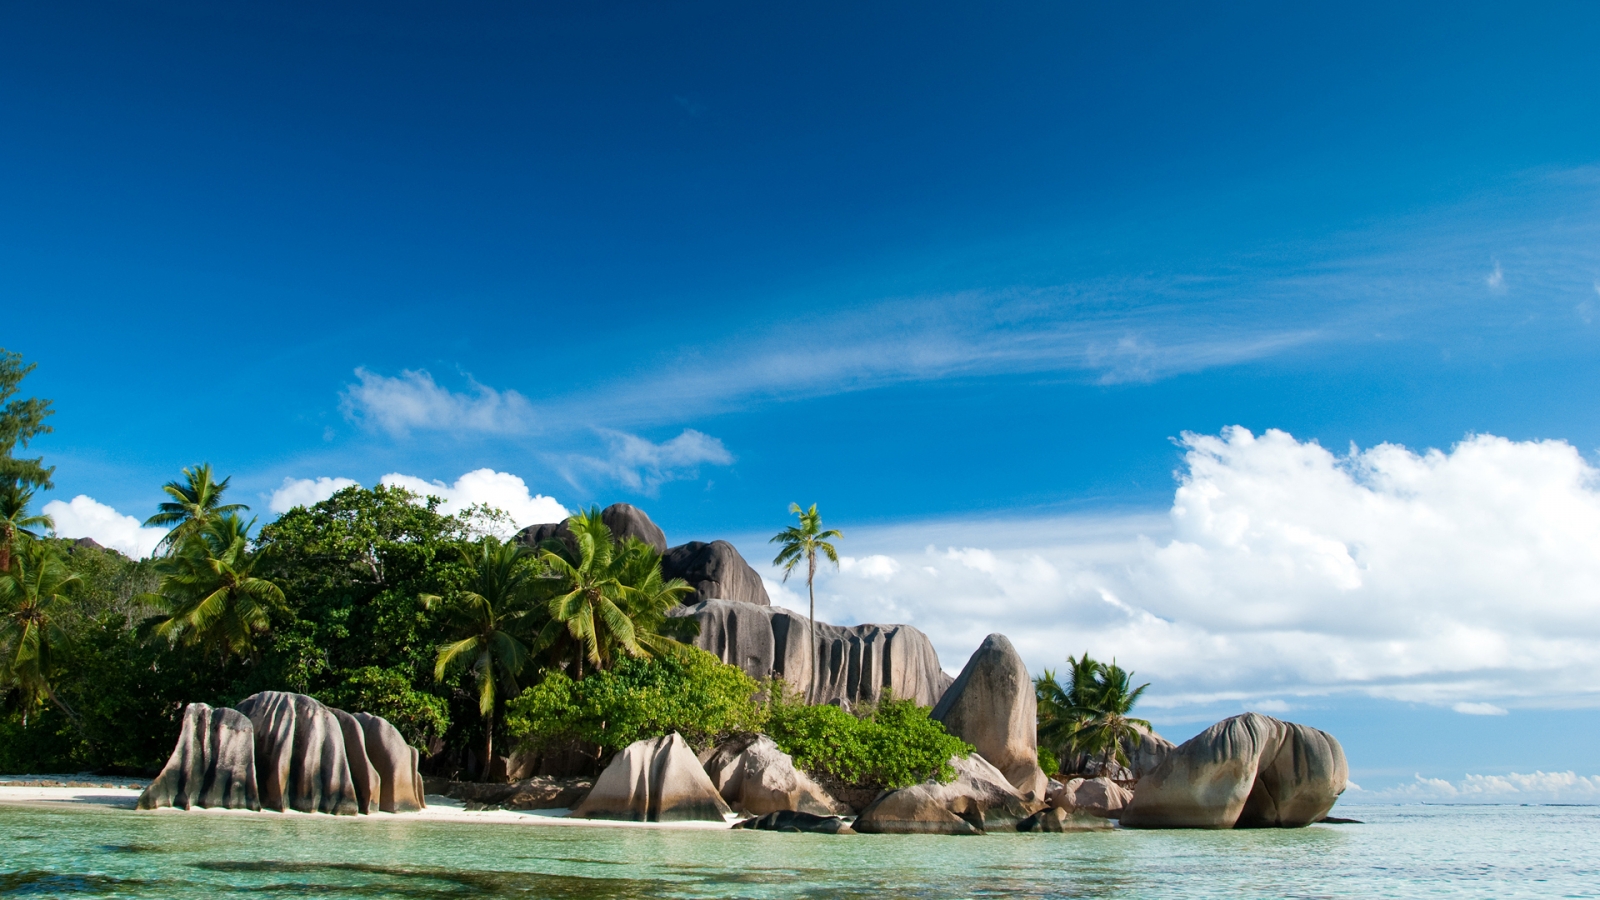 Seychelles Islands Landscape for 1600 x 900 HDTV resolution